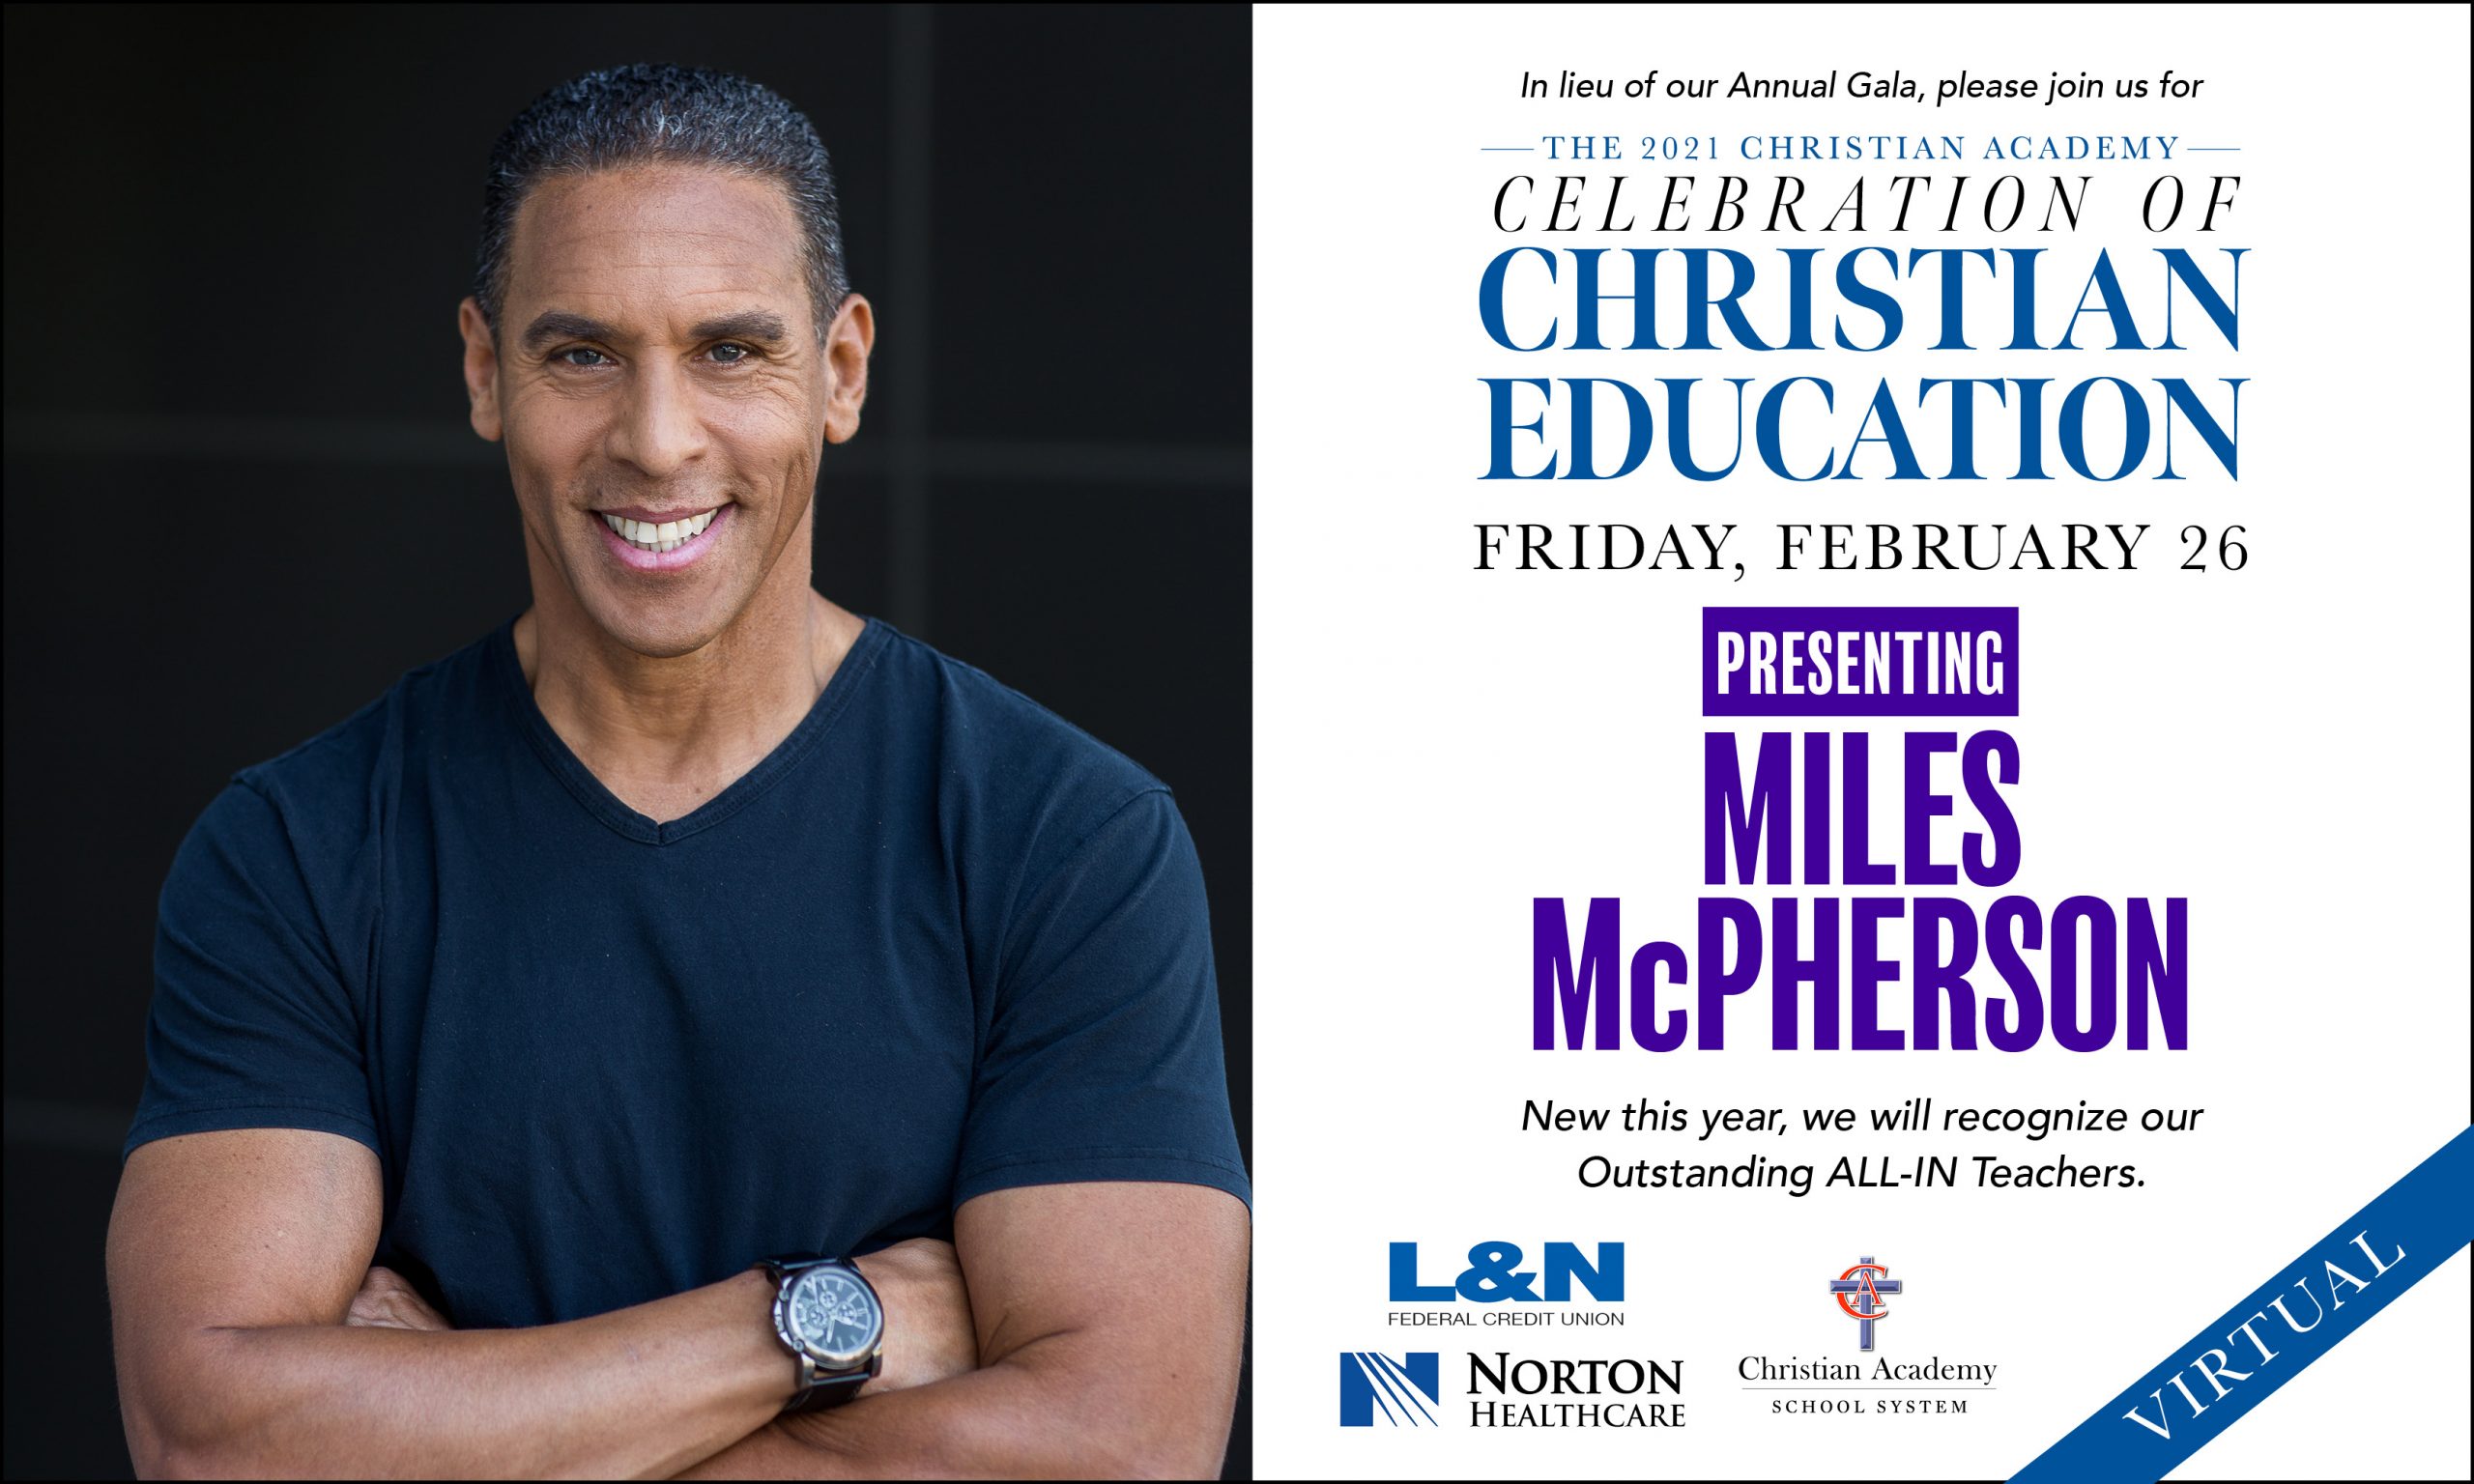 Christian Academy School System | 2021 Christian Academy Celebration of Christian Education | Mile McPherson | February 26